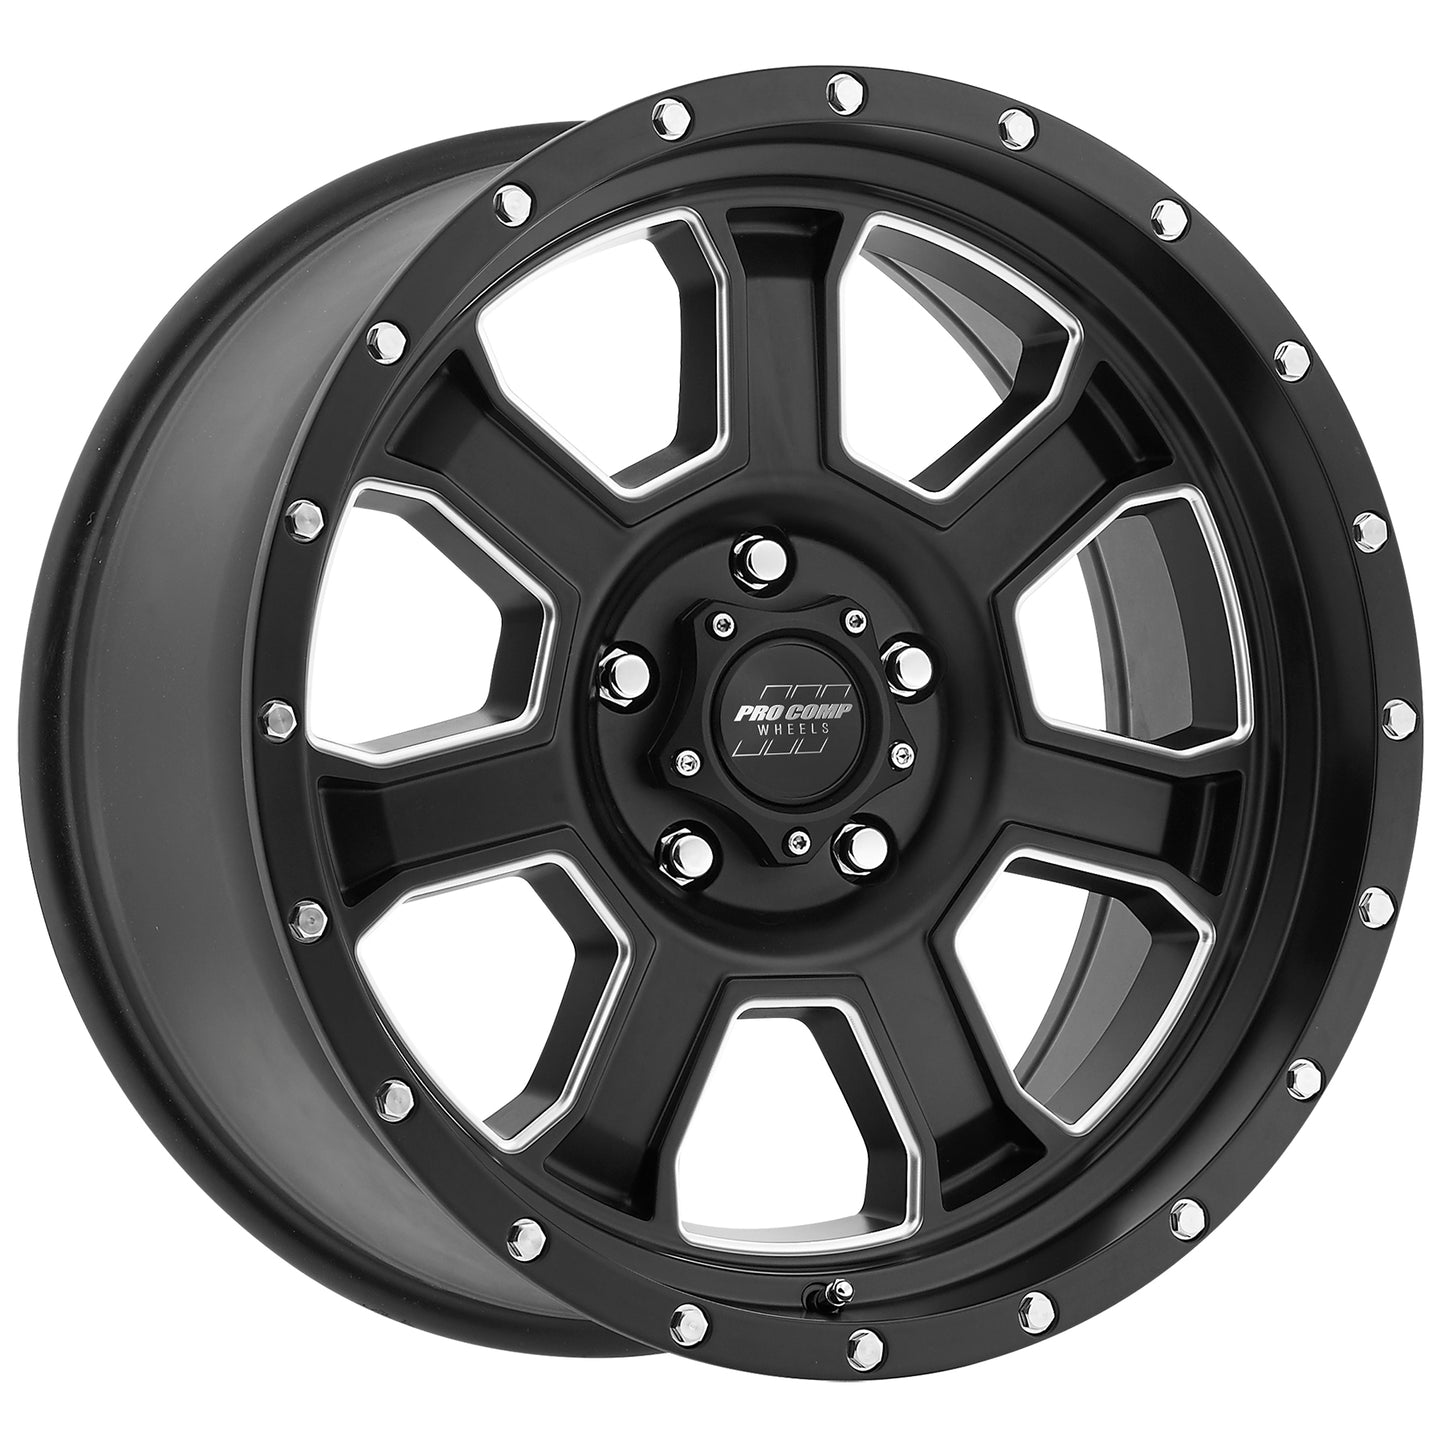 Pro Comp Wheels Sledge Satin Black Milled 20X9 5x5 5BS Offset 0mm Cap P/N 504432700 5143-2973